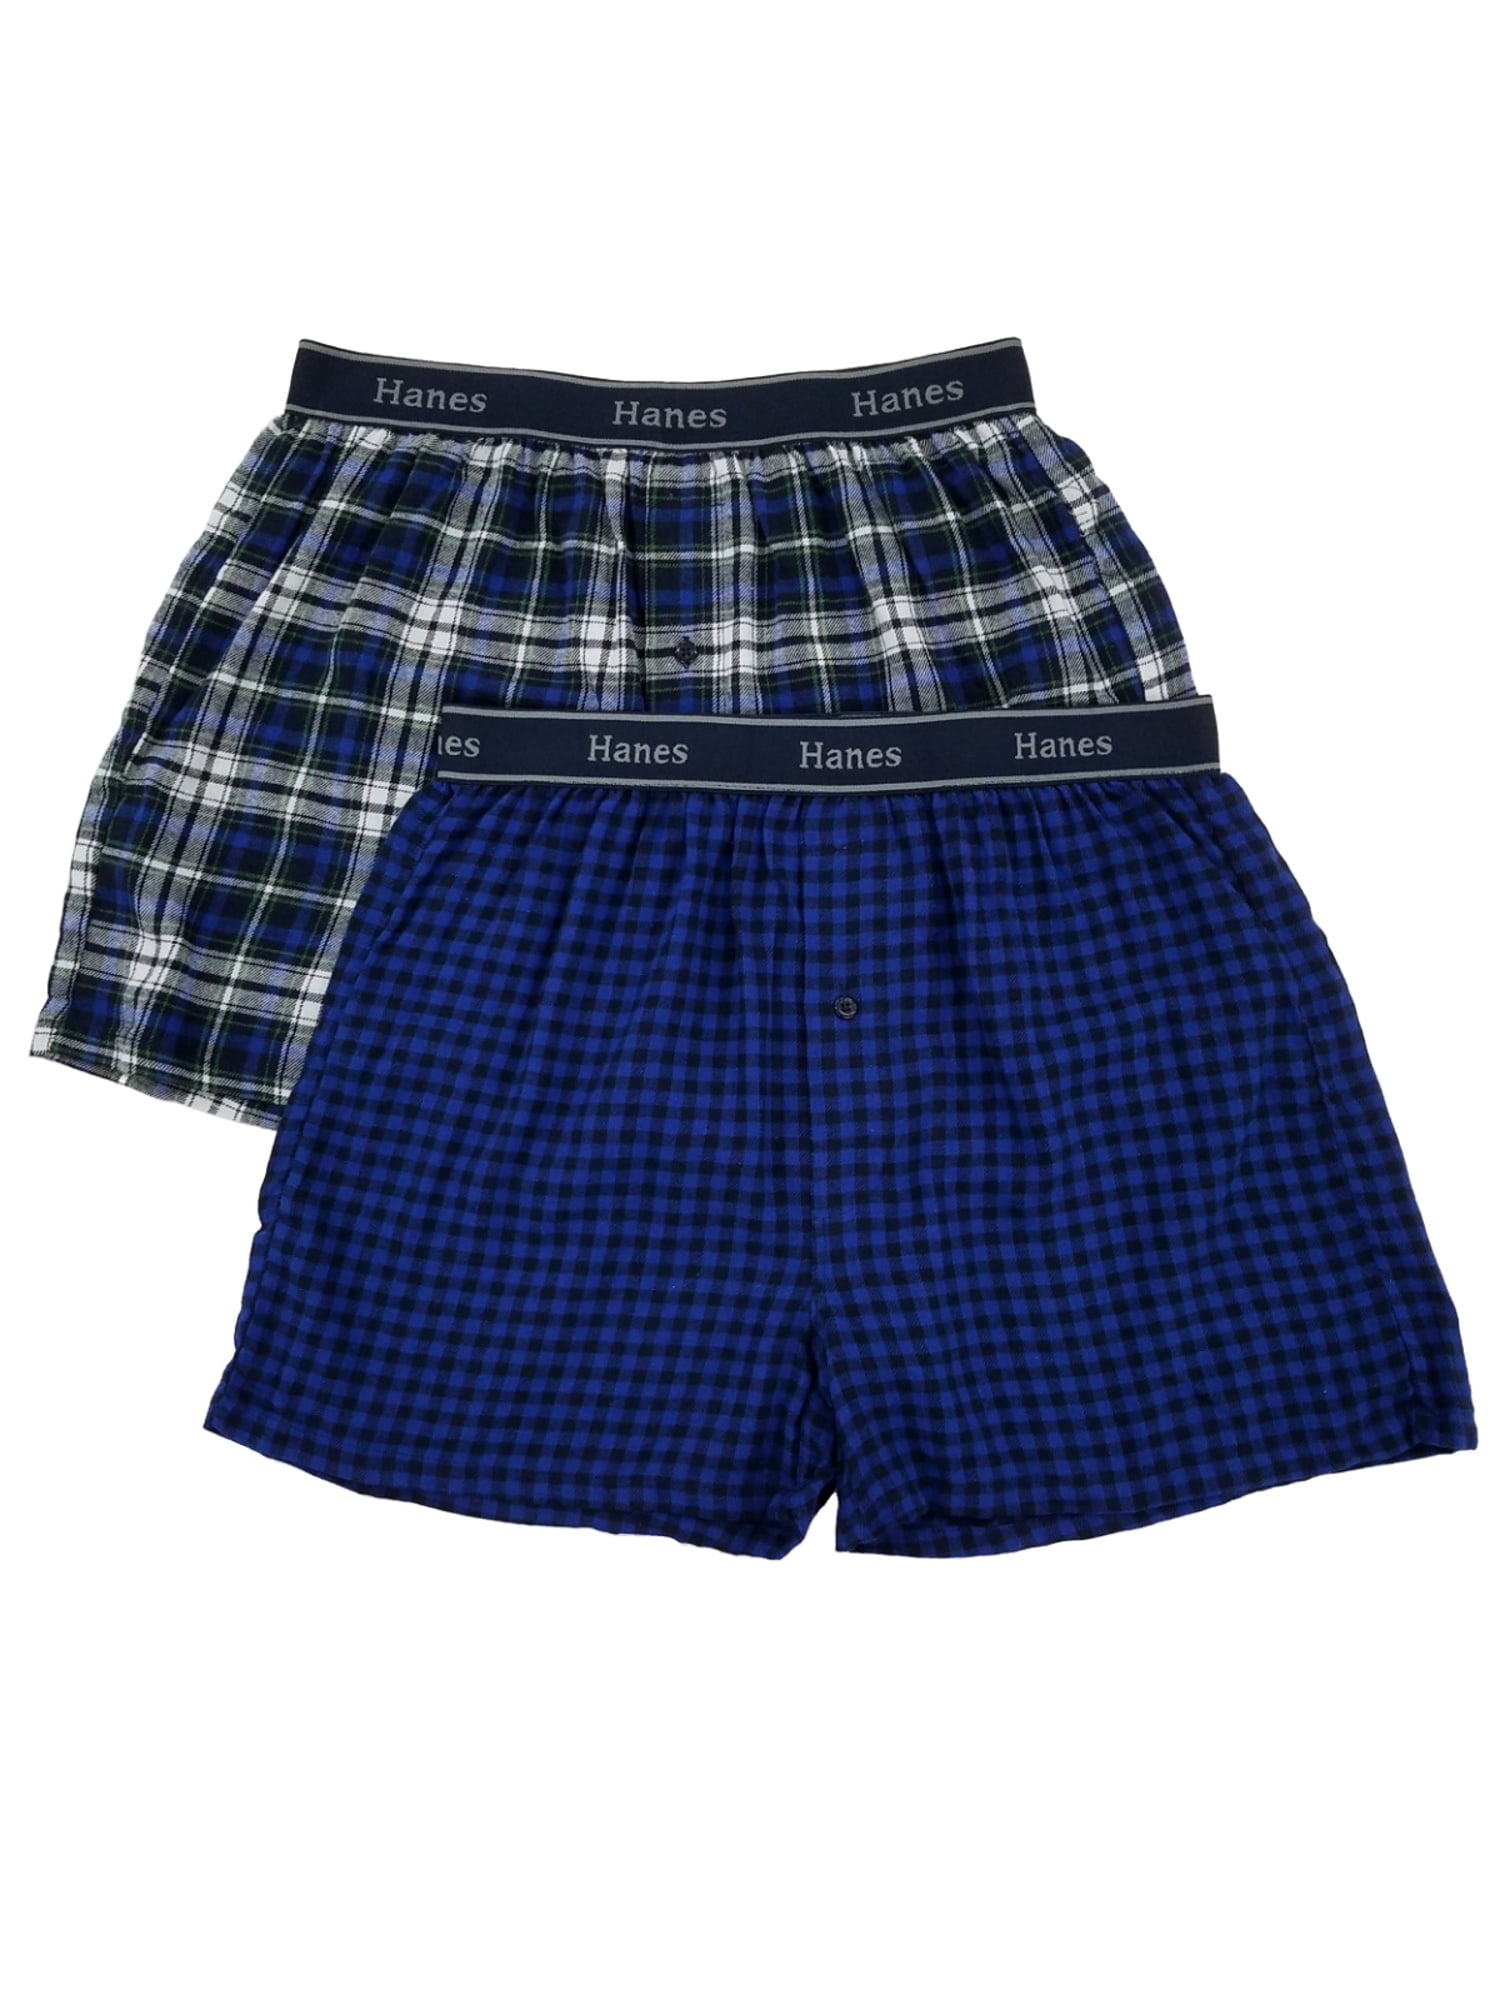 Hanes Mens 2-Pack Blue & Black Plaid Flannel Boxer Shorts - Walmart.com